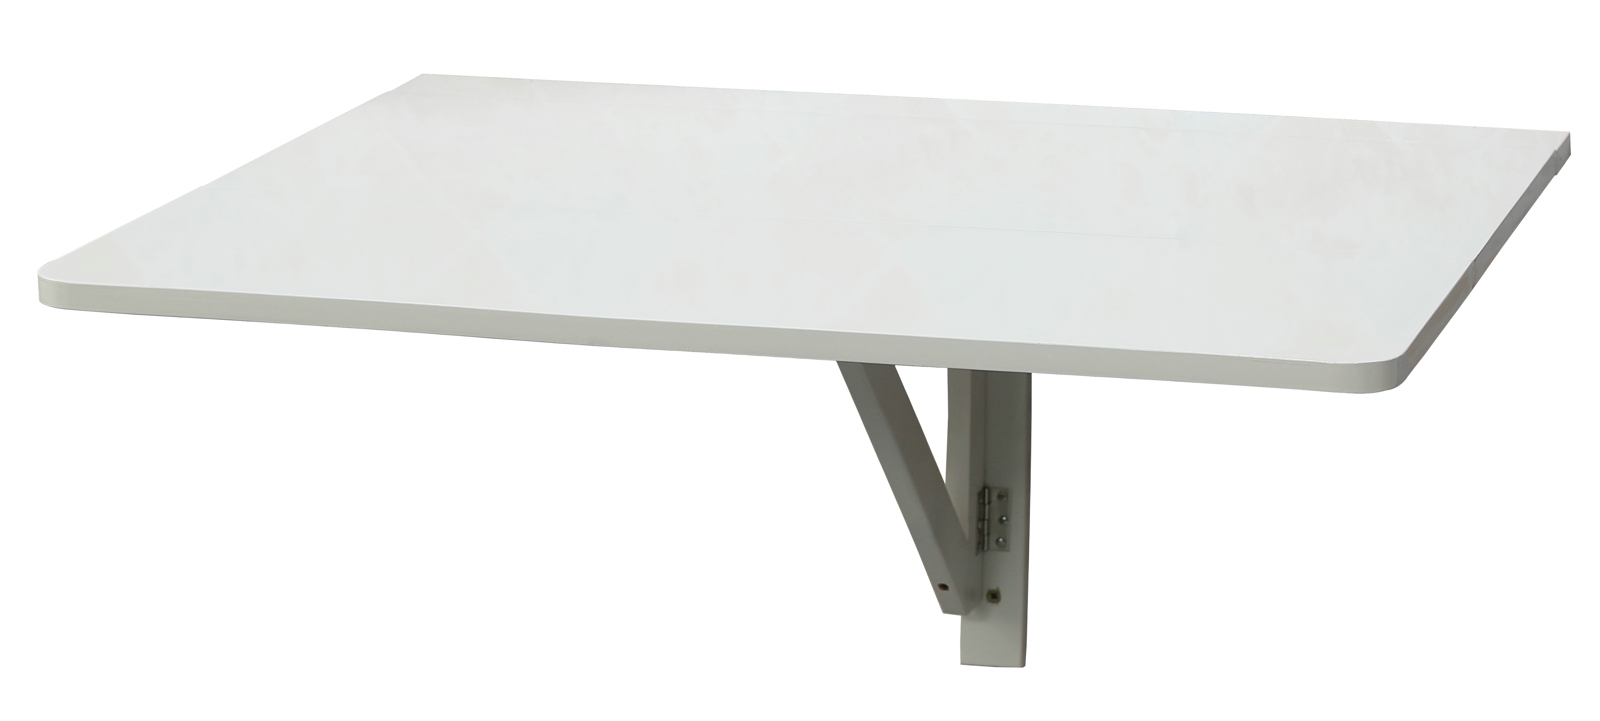 white drop leaf kitchen table